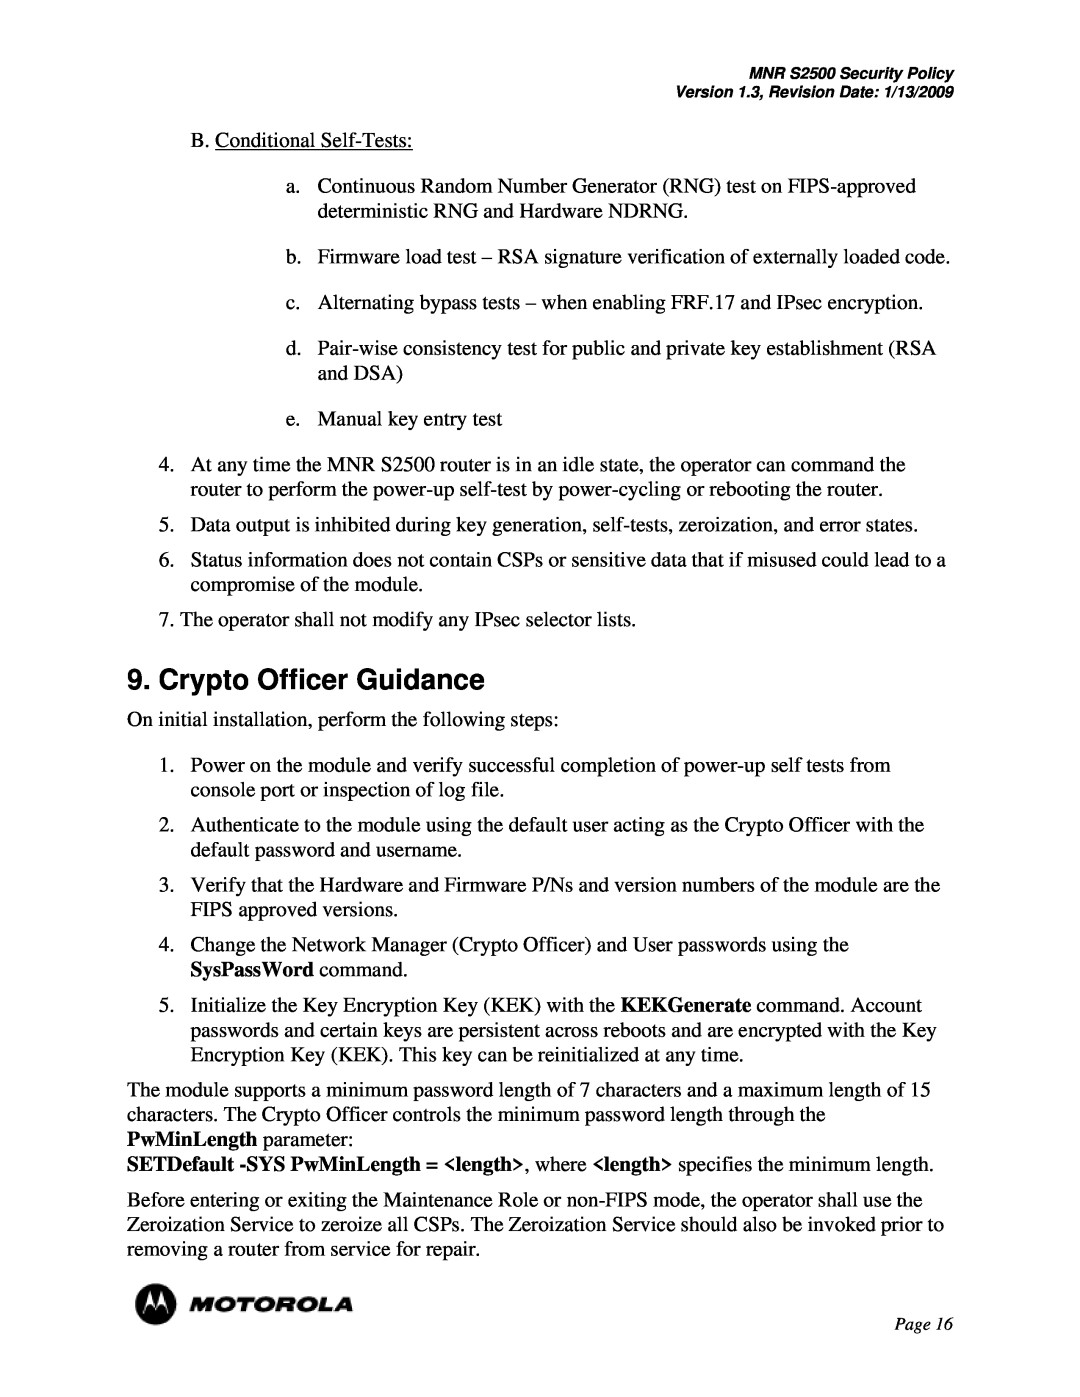 Motorola S2500 manual Crypto Officer Guidance 